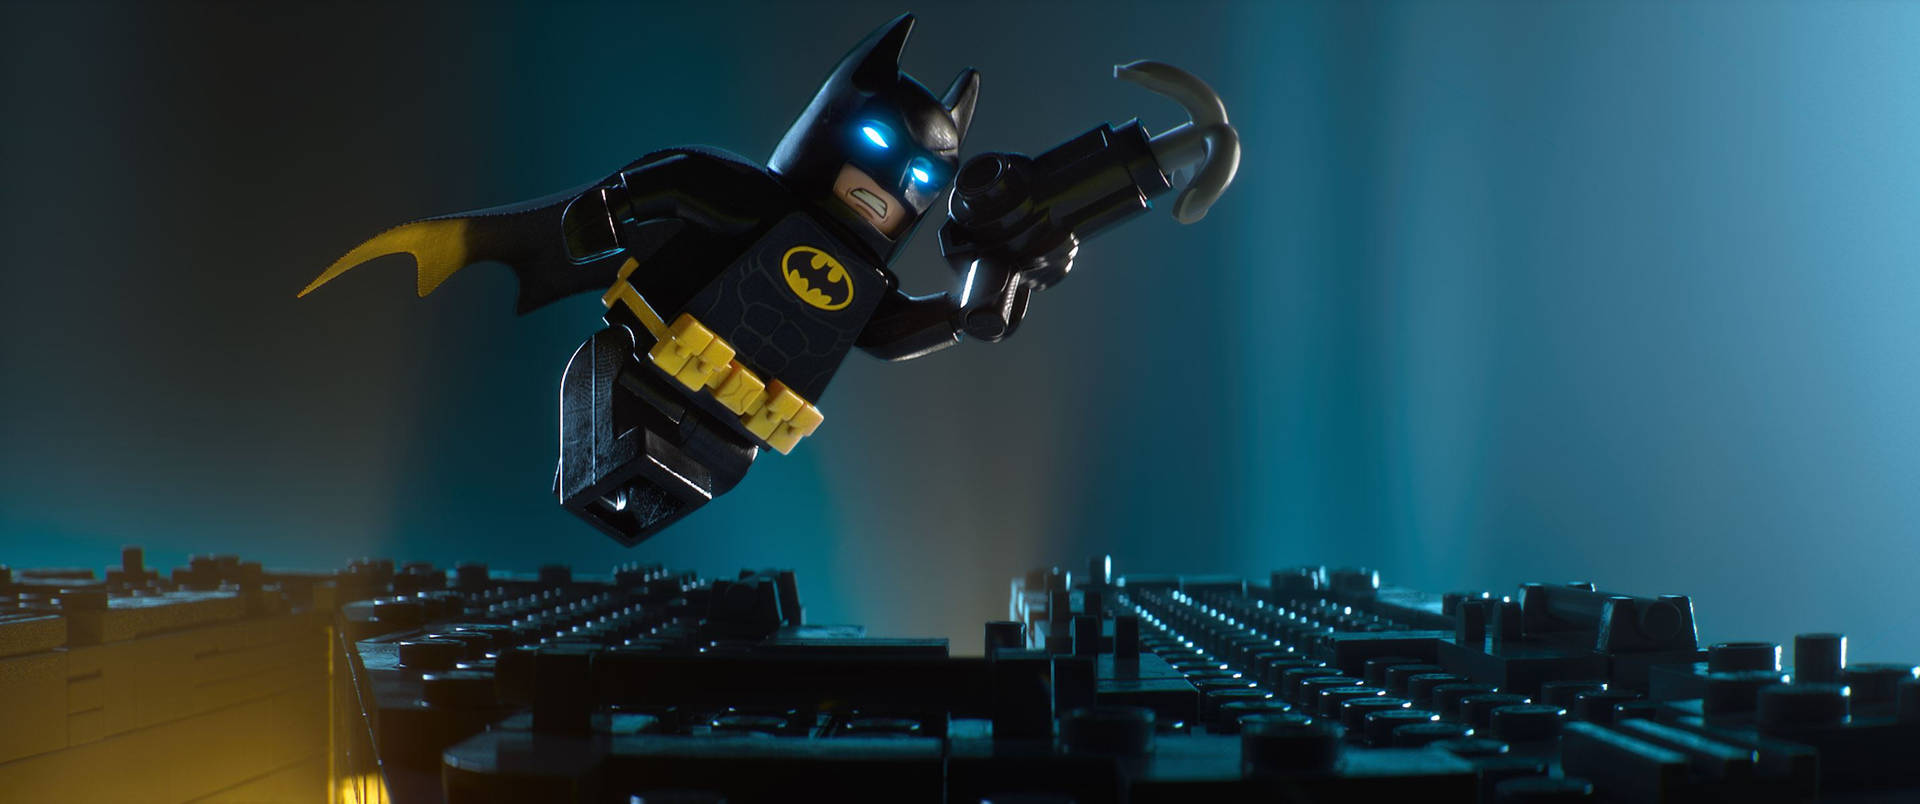 The Lego Batman Movie Flying Batman Scene Picture